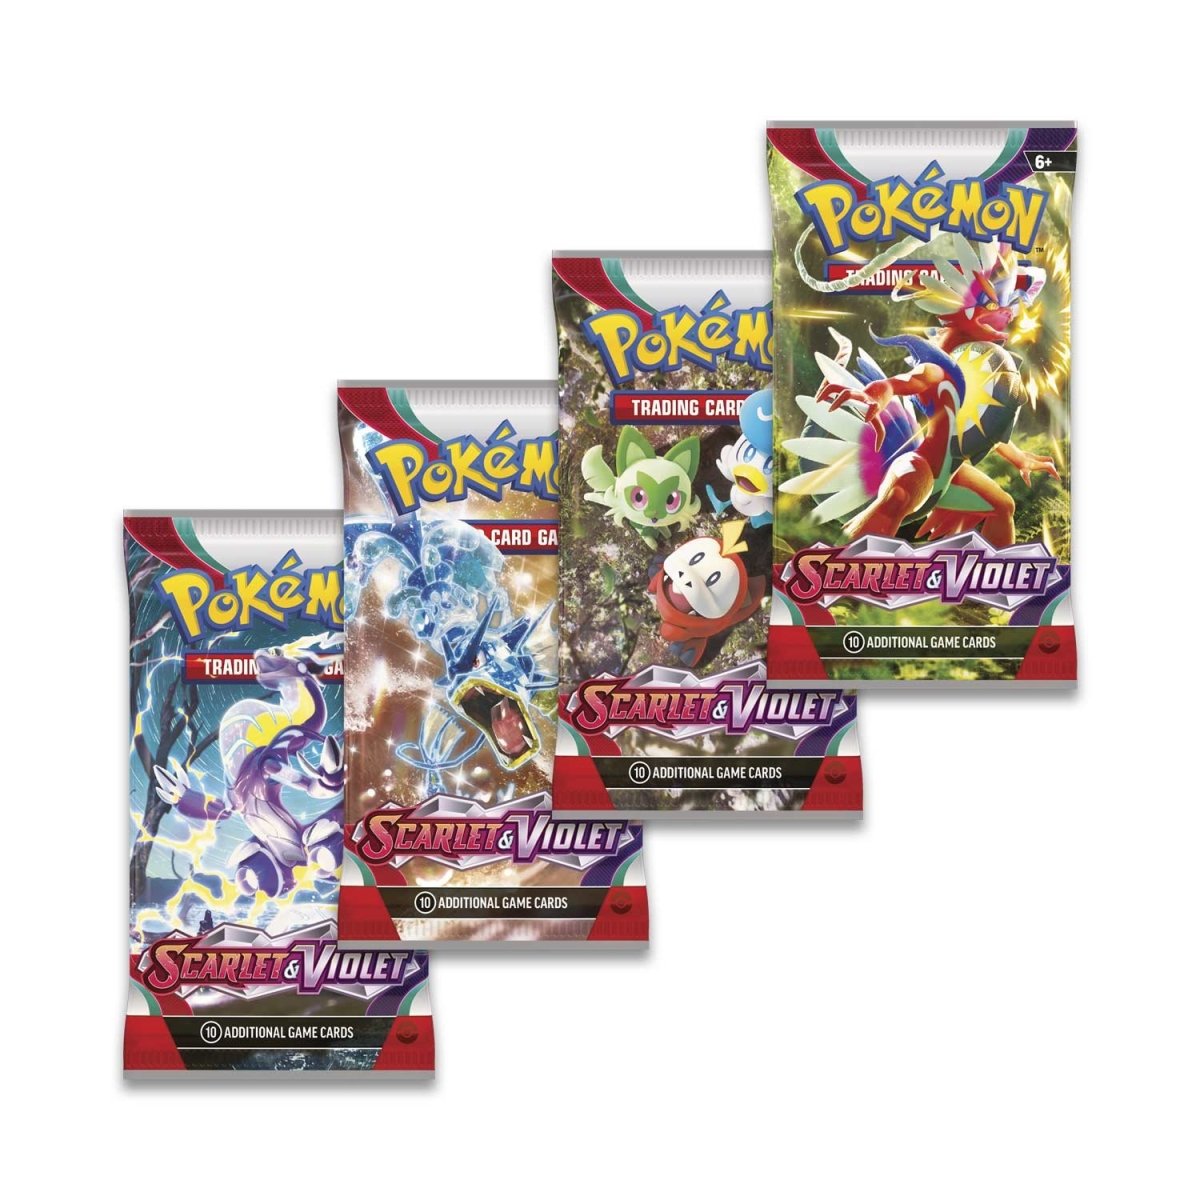  Pokémon TCG: Cyclizar ex Box - 4 Packs, Promo Cards : Toys &  Games